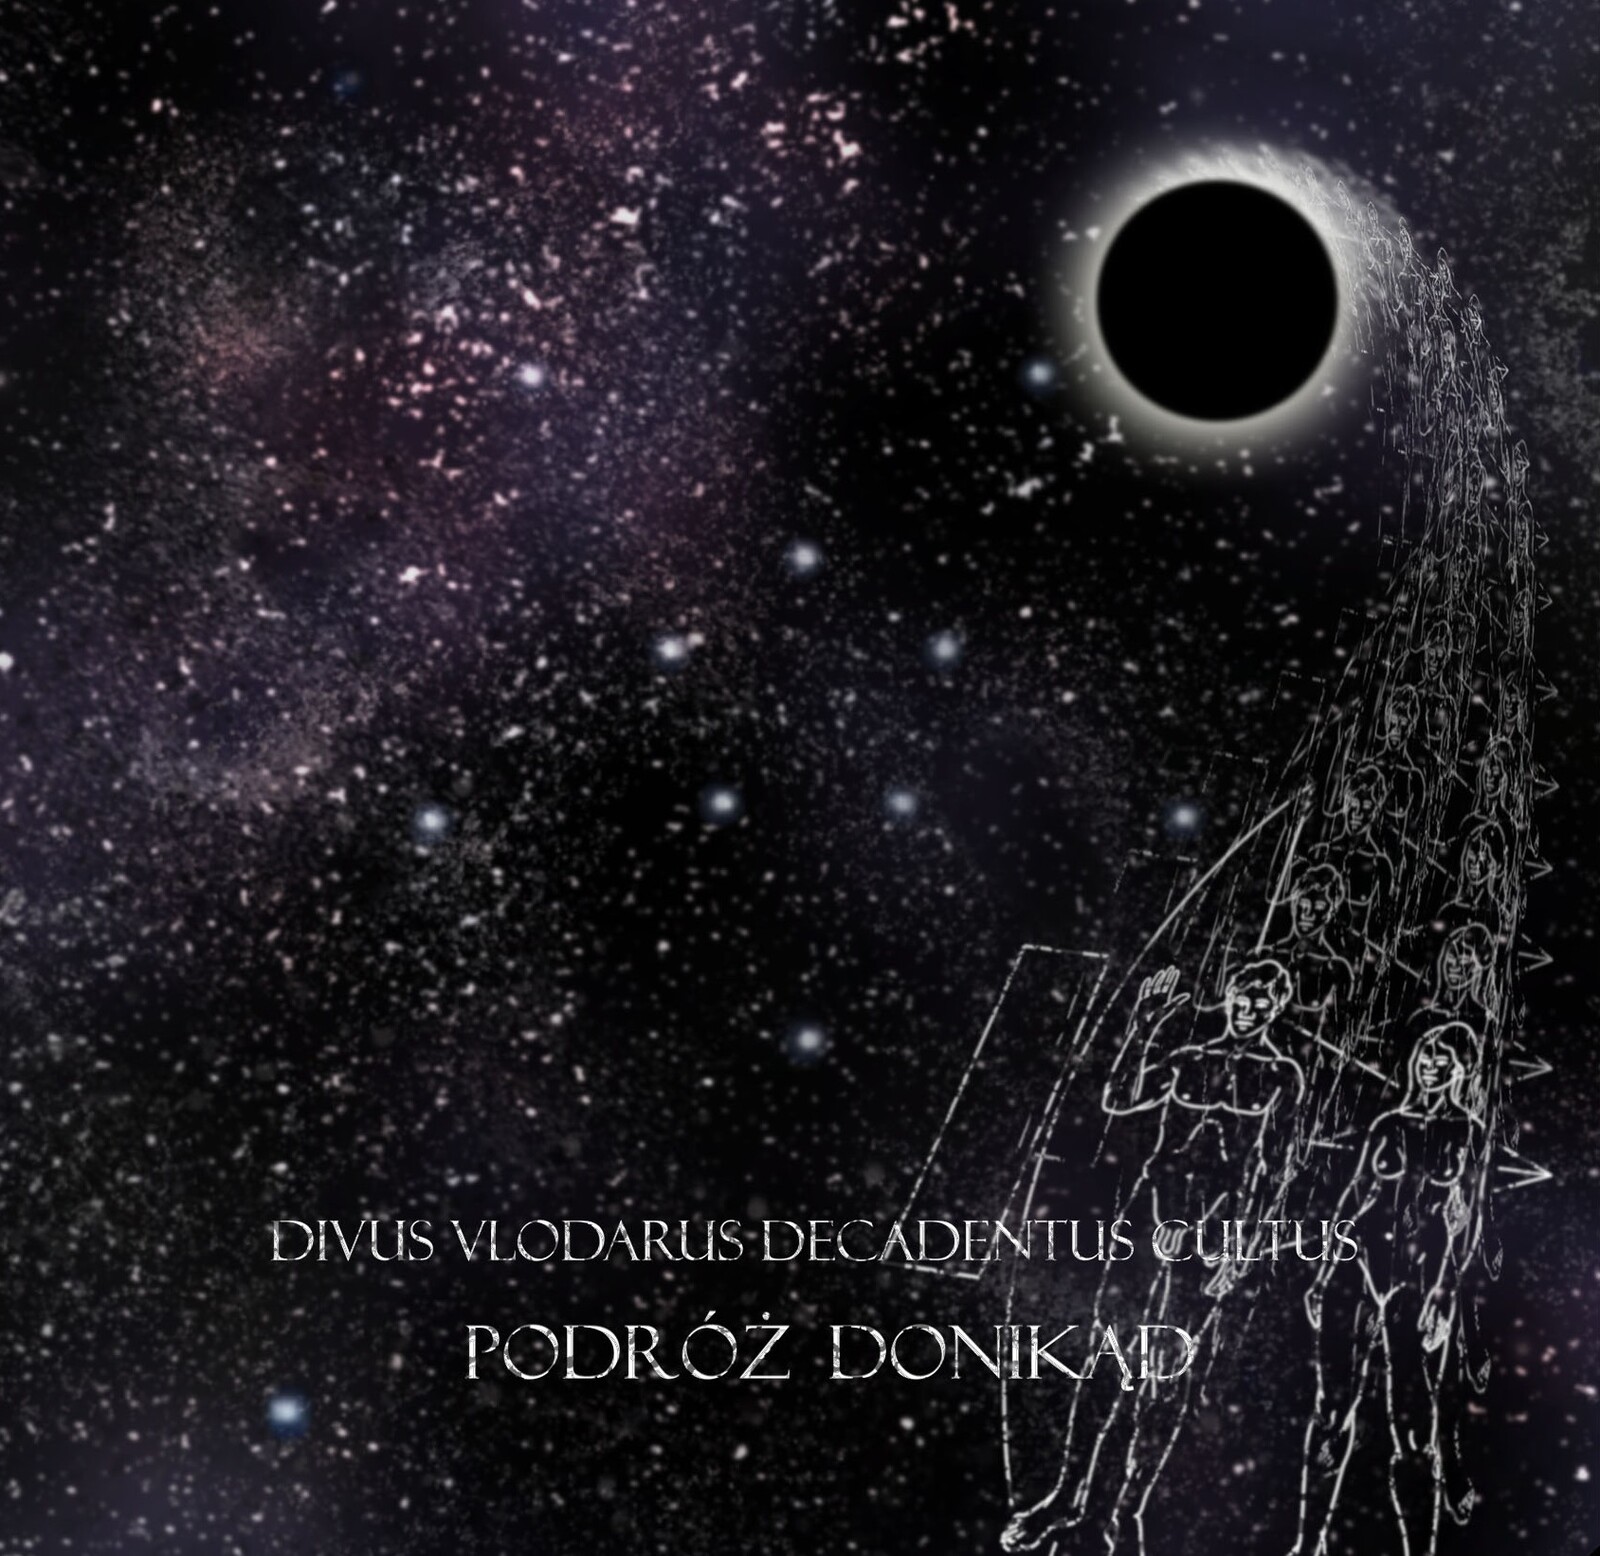 A journey to Nowhere -a front cover - Podróż donikąd -przód okładki - Adobe Photoshop